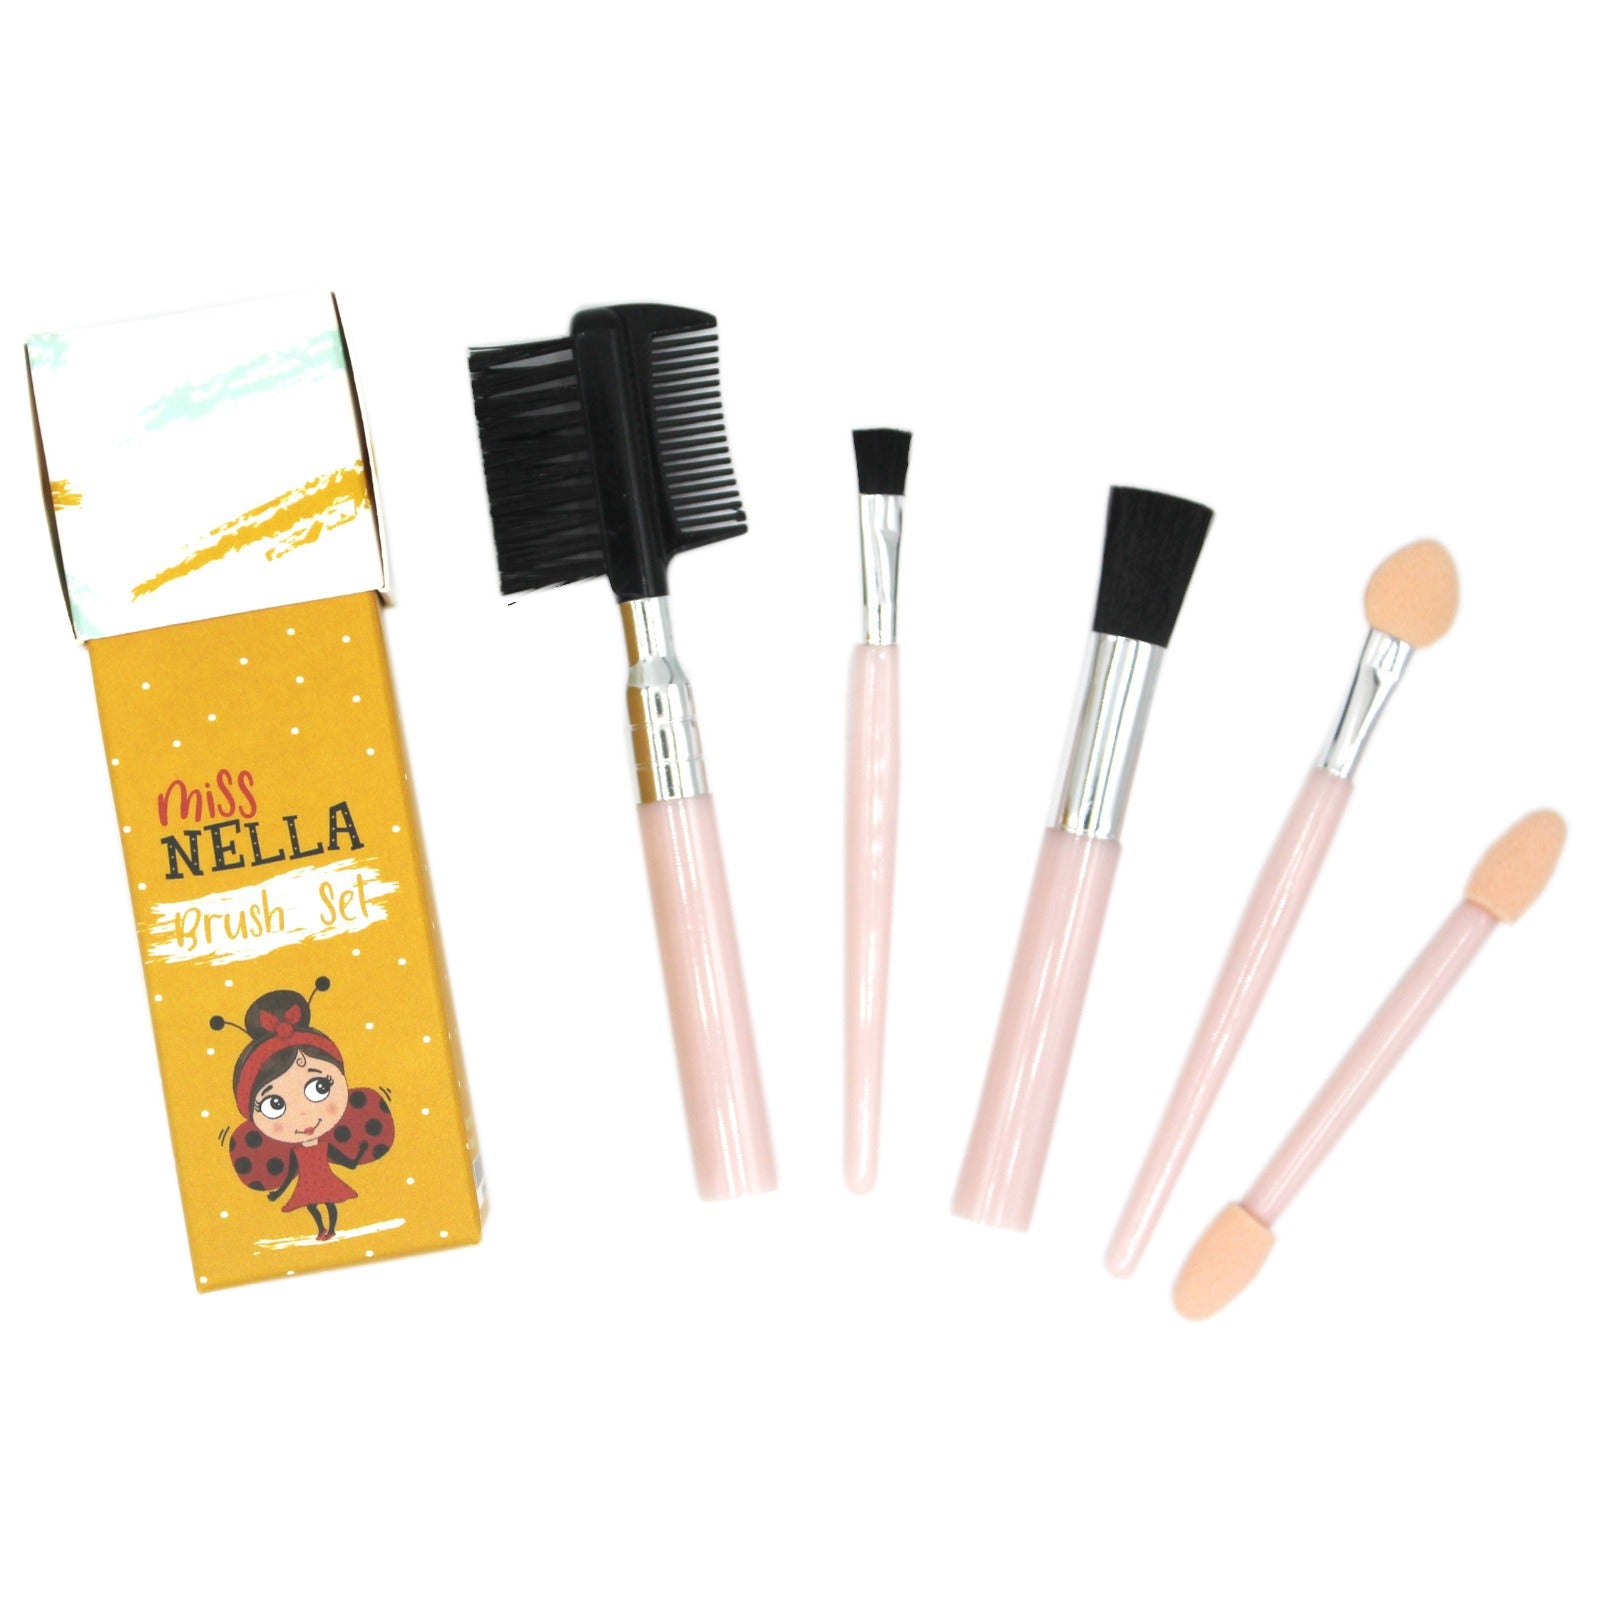 Miss Nella Make Up Brush Set for Kids